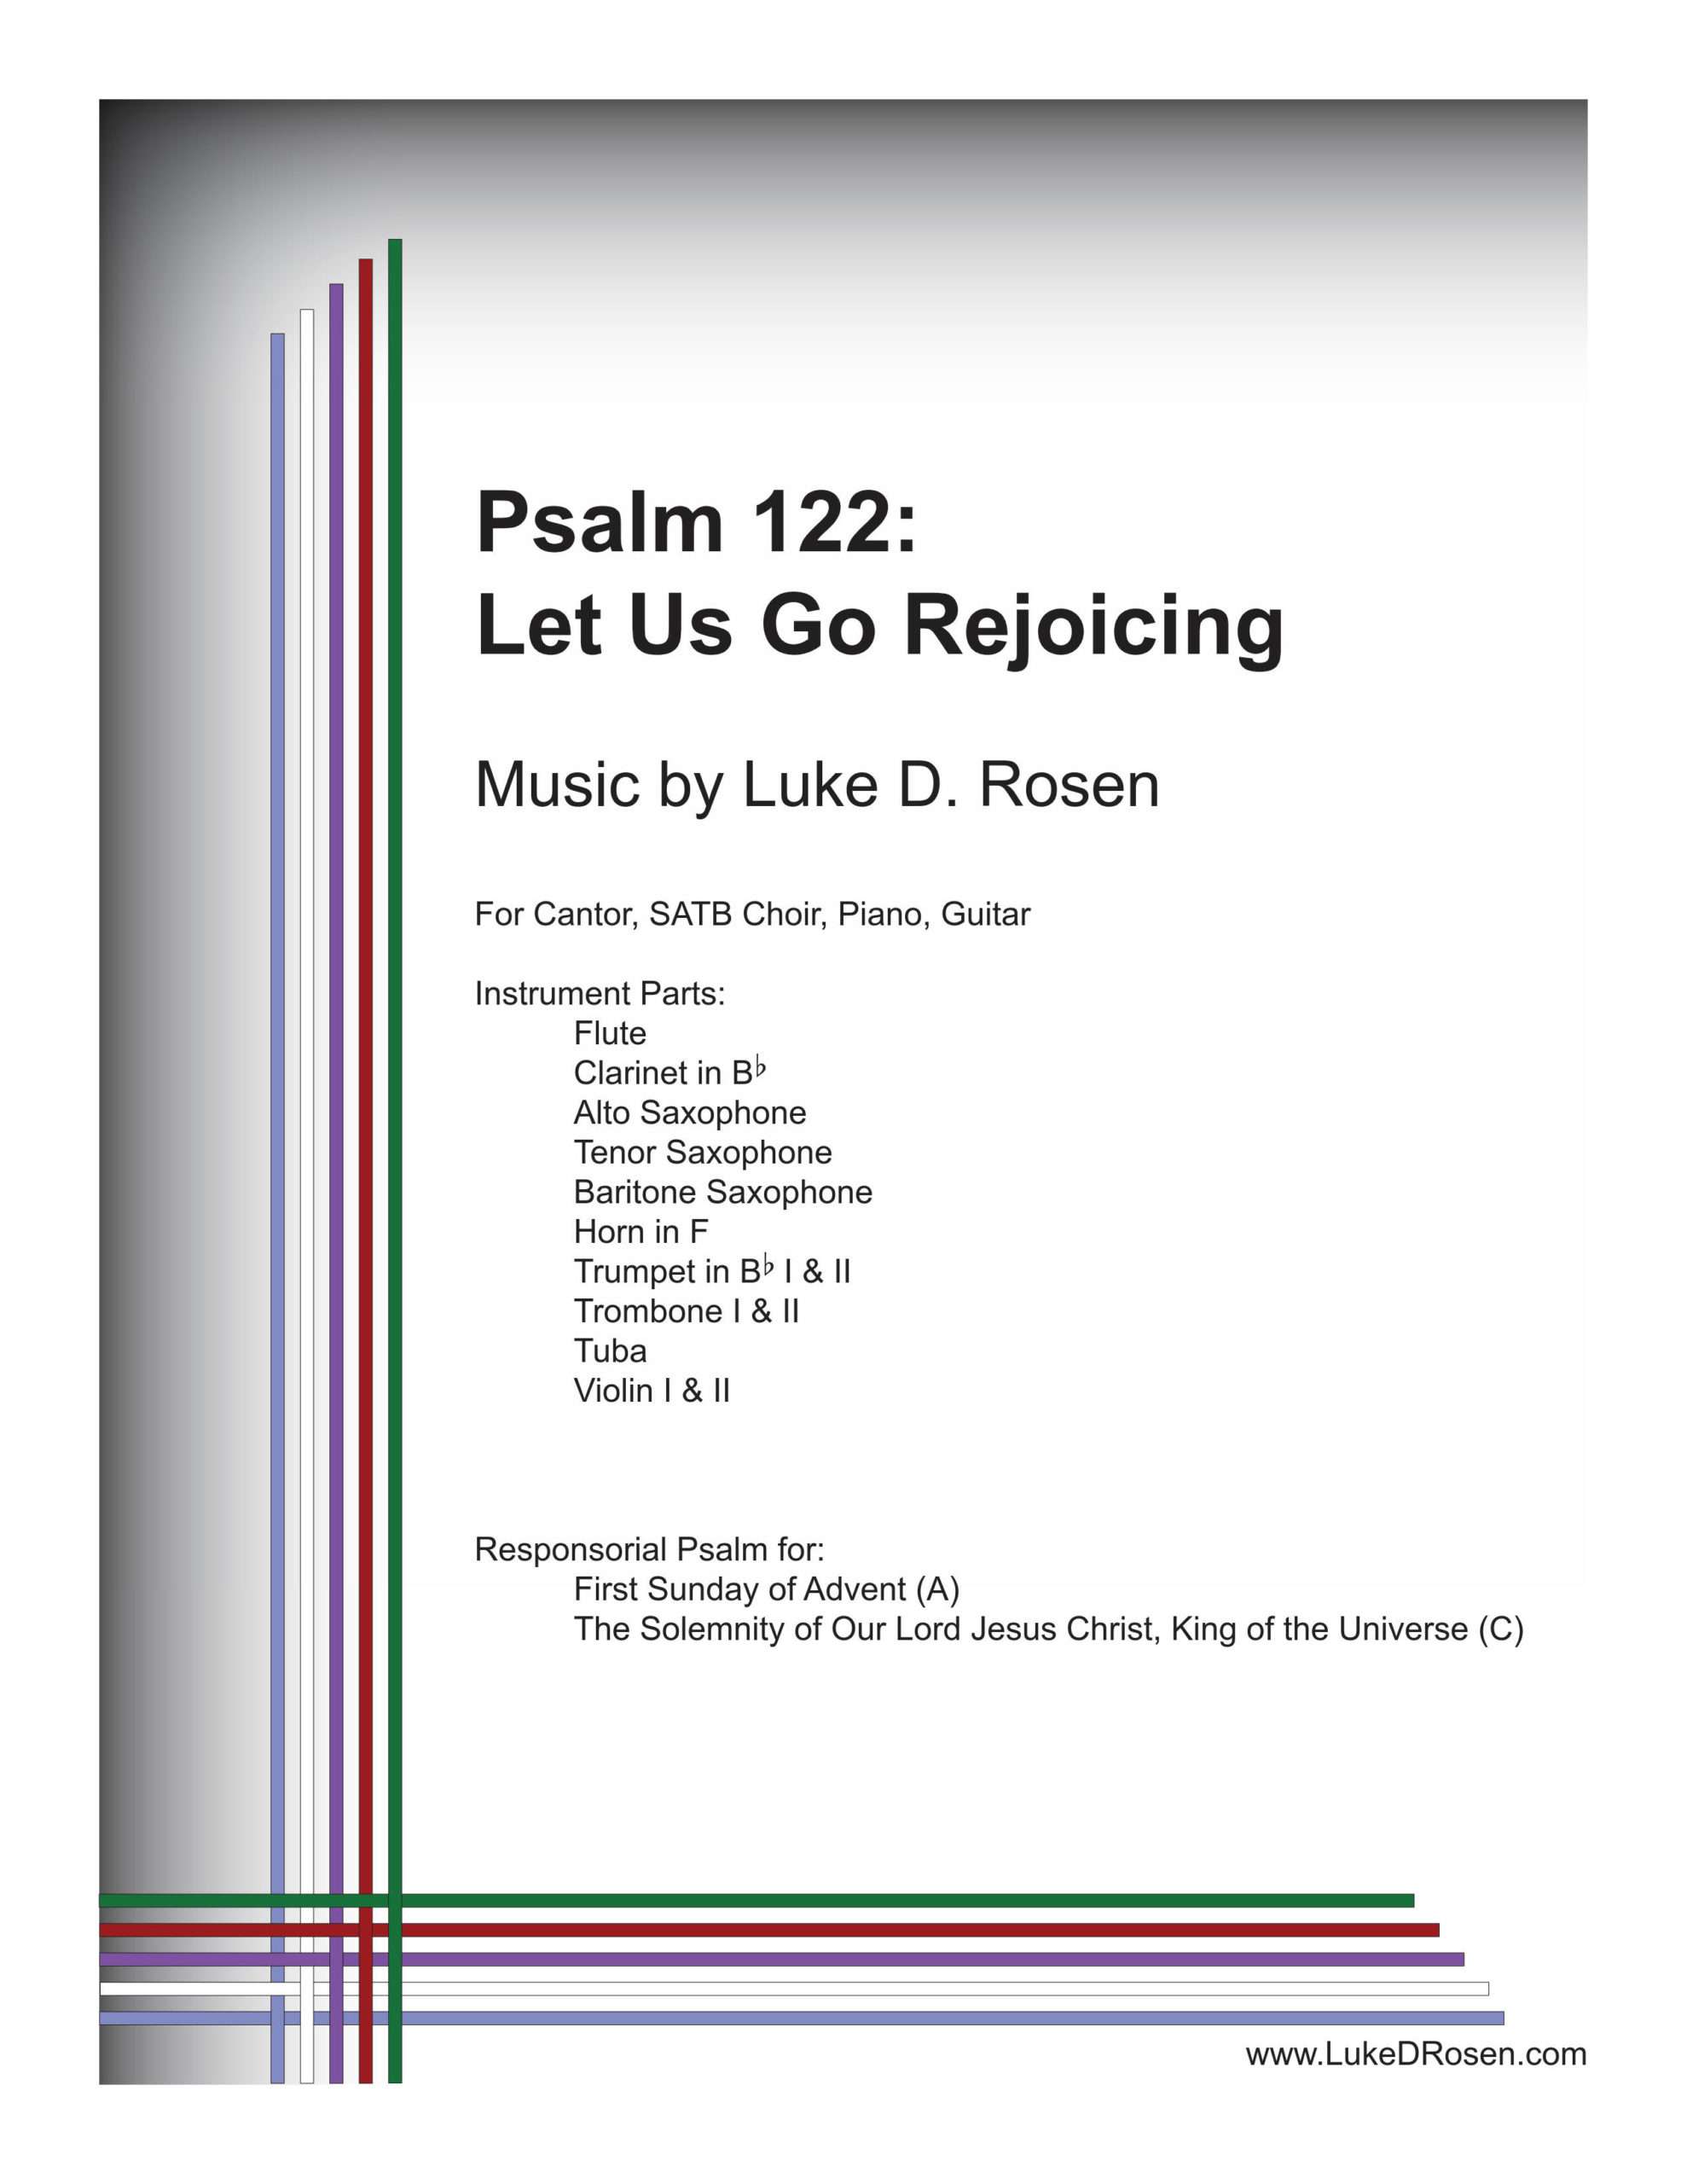 Psalm 122 – Let Us Go Rejoicing (Rosen)